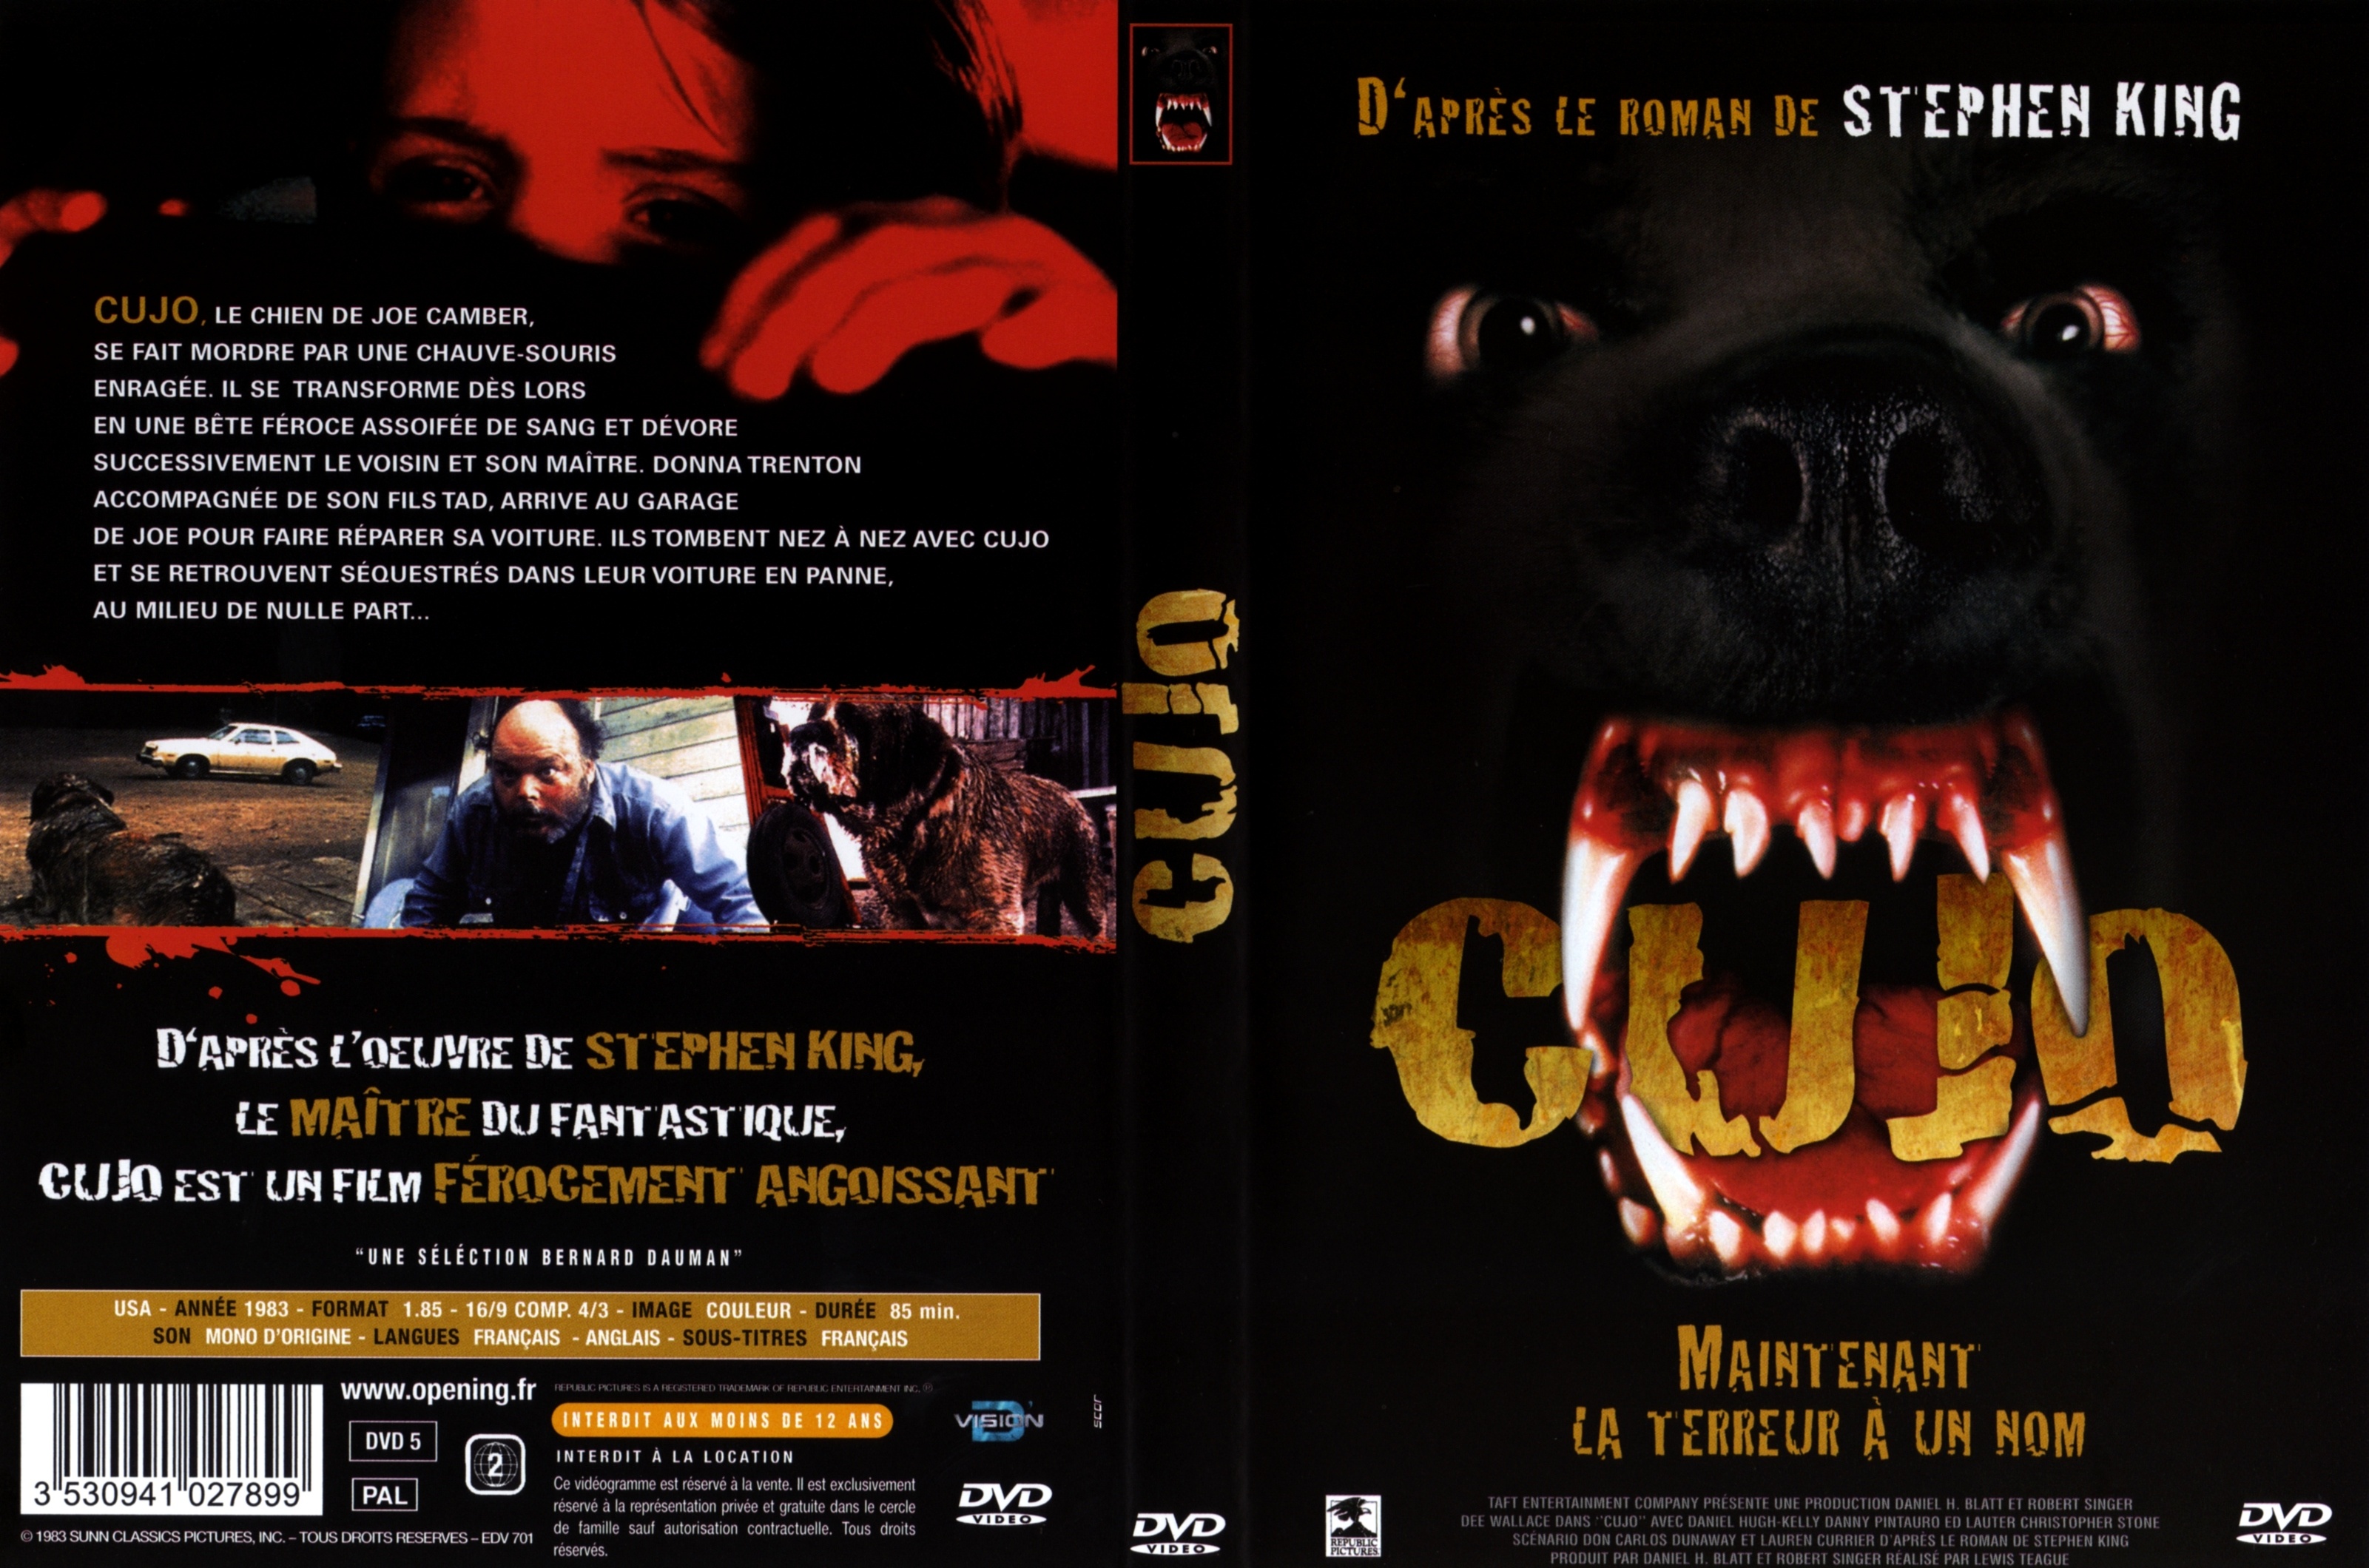 Jaquette DVD Cujo